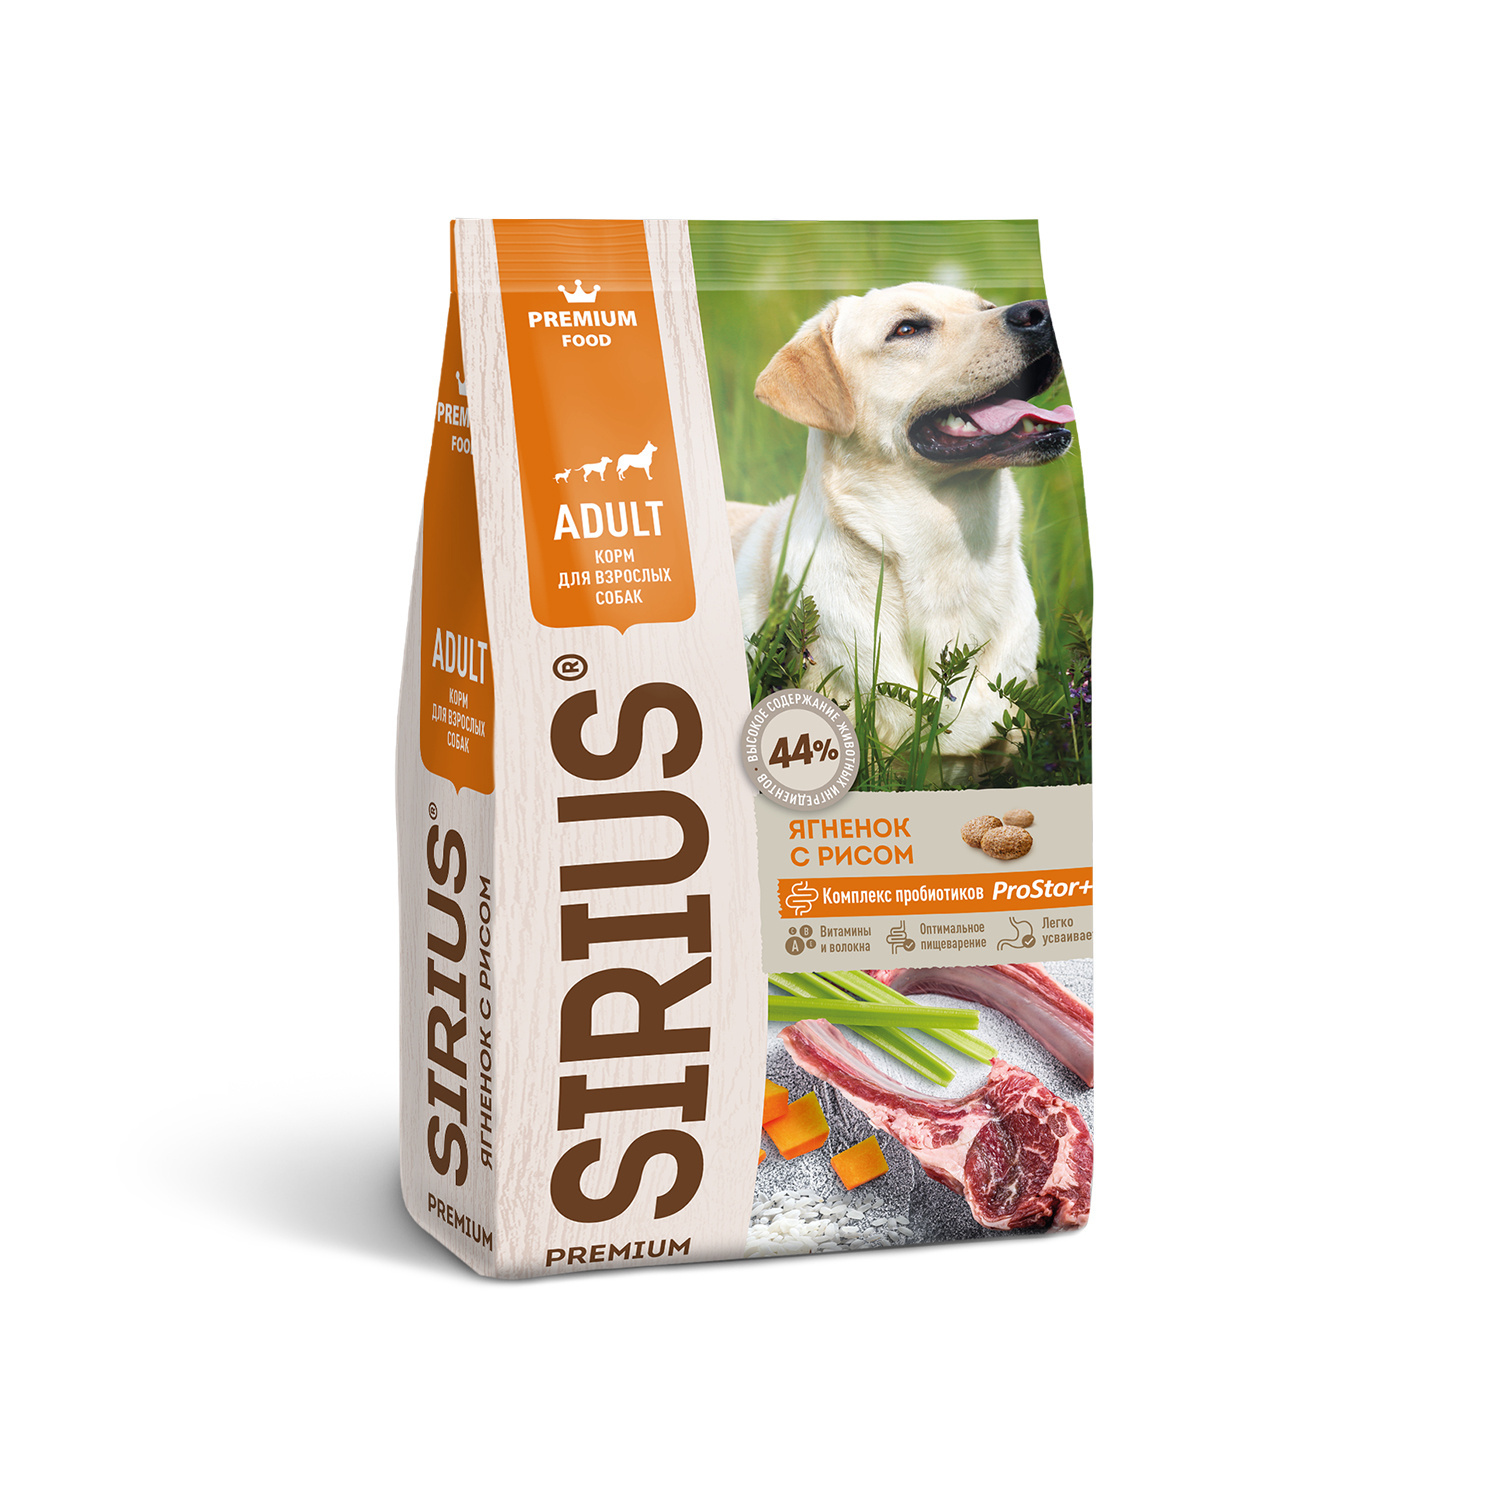 Sirius Sirius сухой корм для собак, ягненок и рис (2 кг)